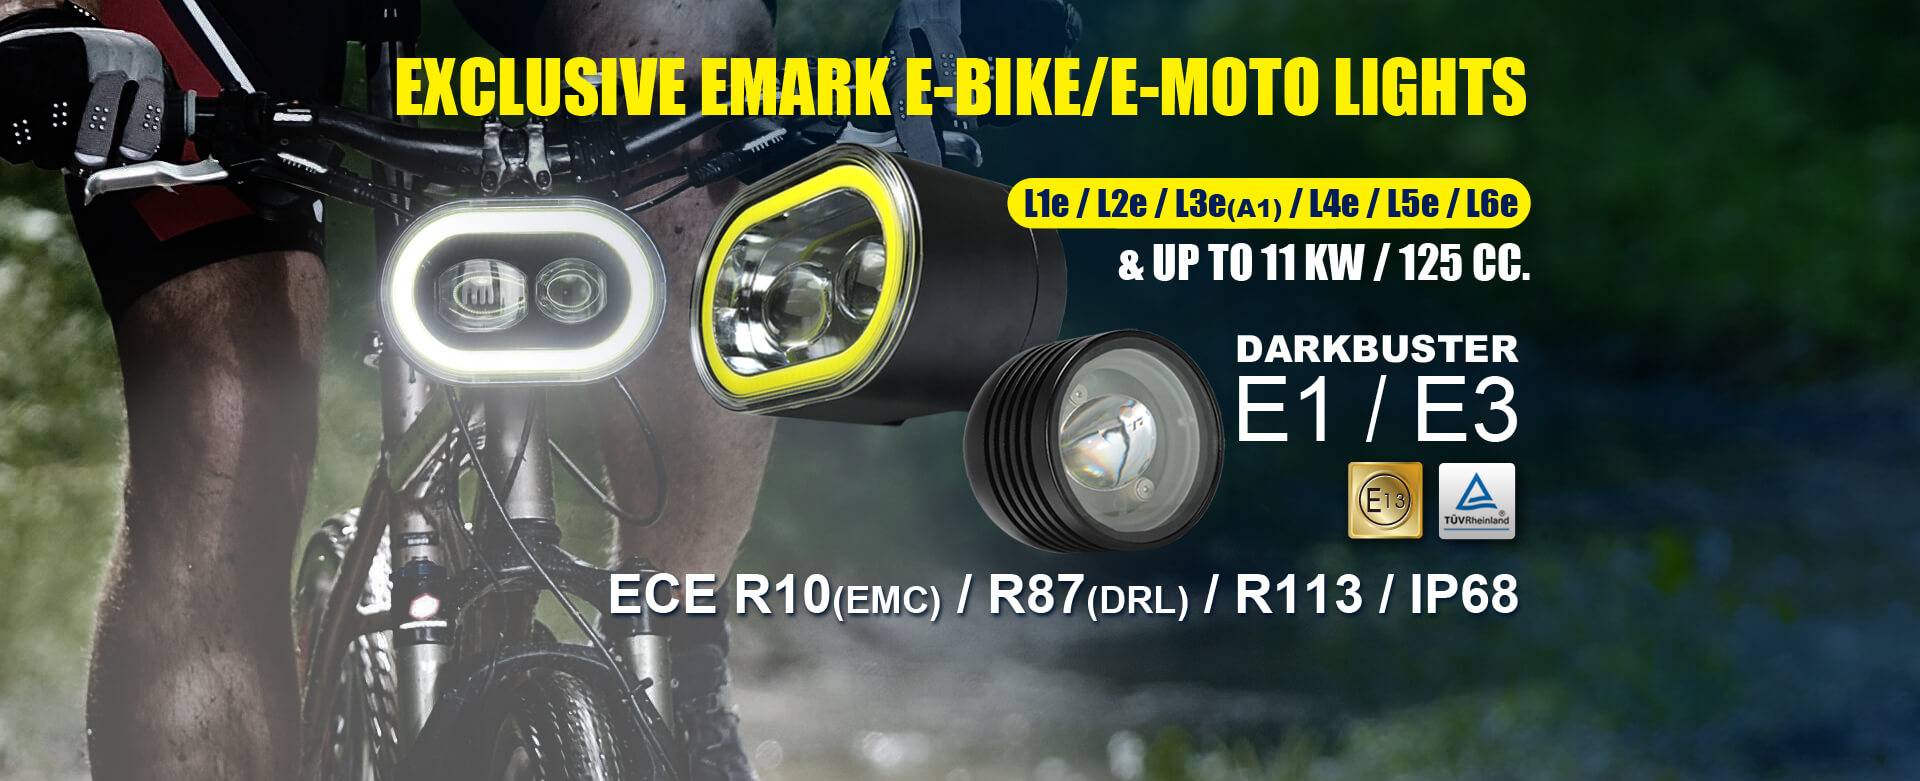 Exclusive EMARK E-BikeE-Moto Lights-3